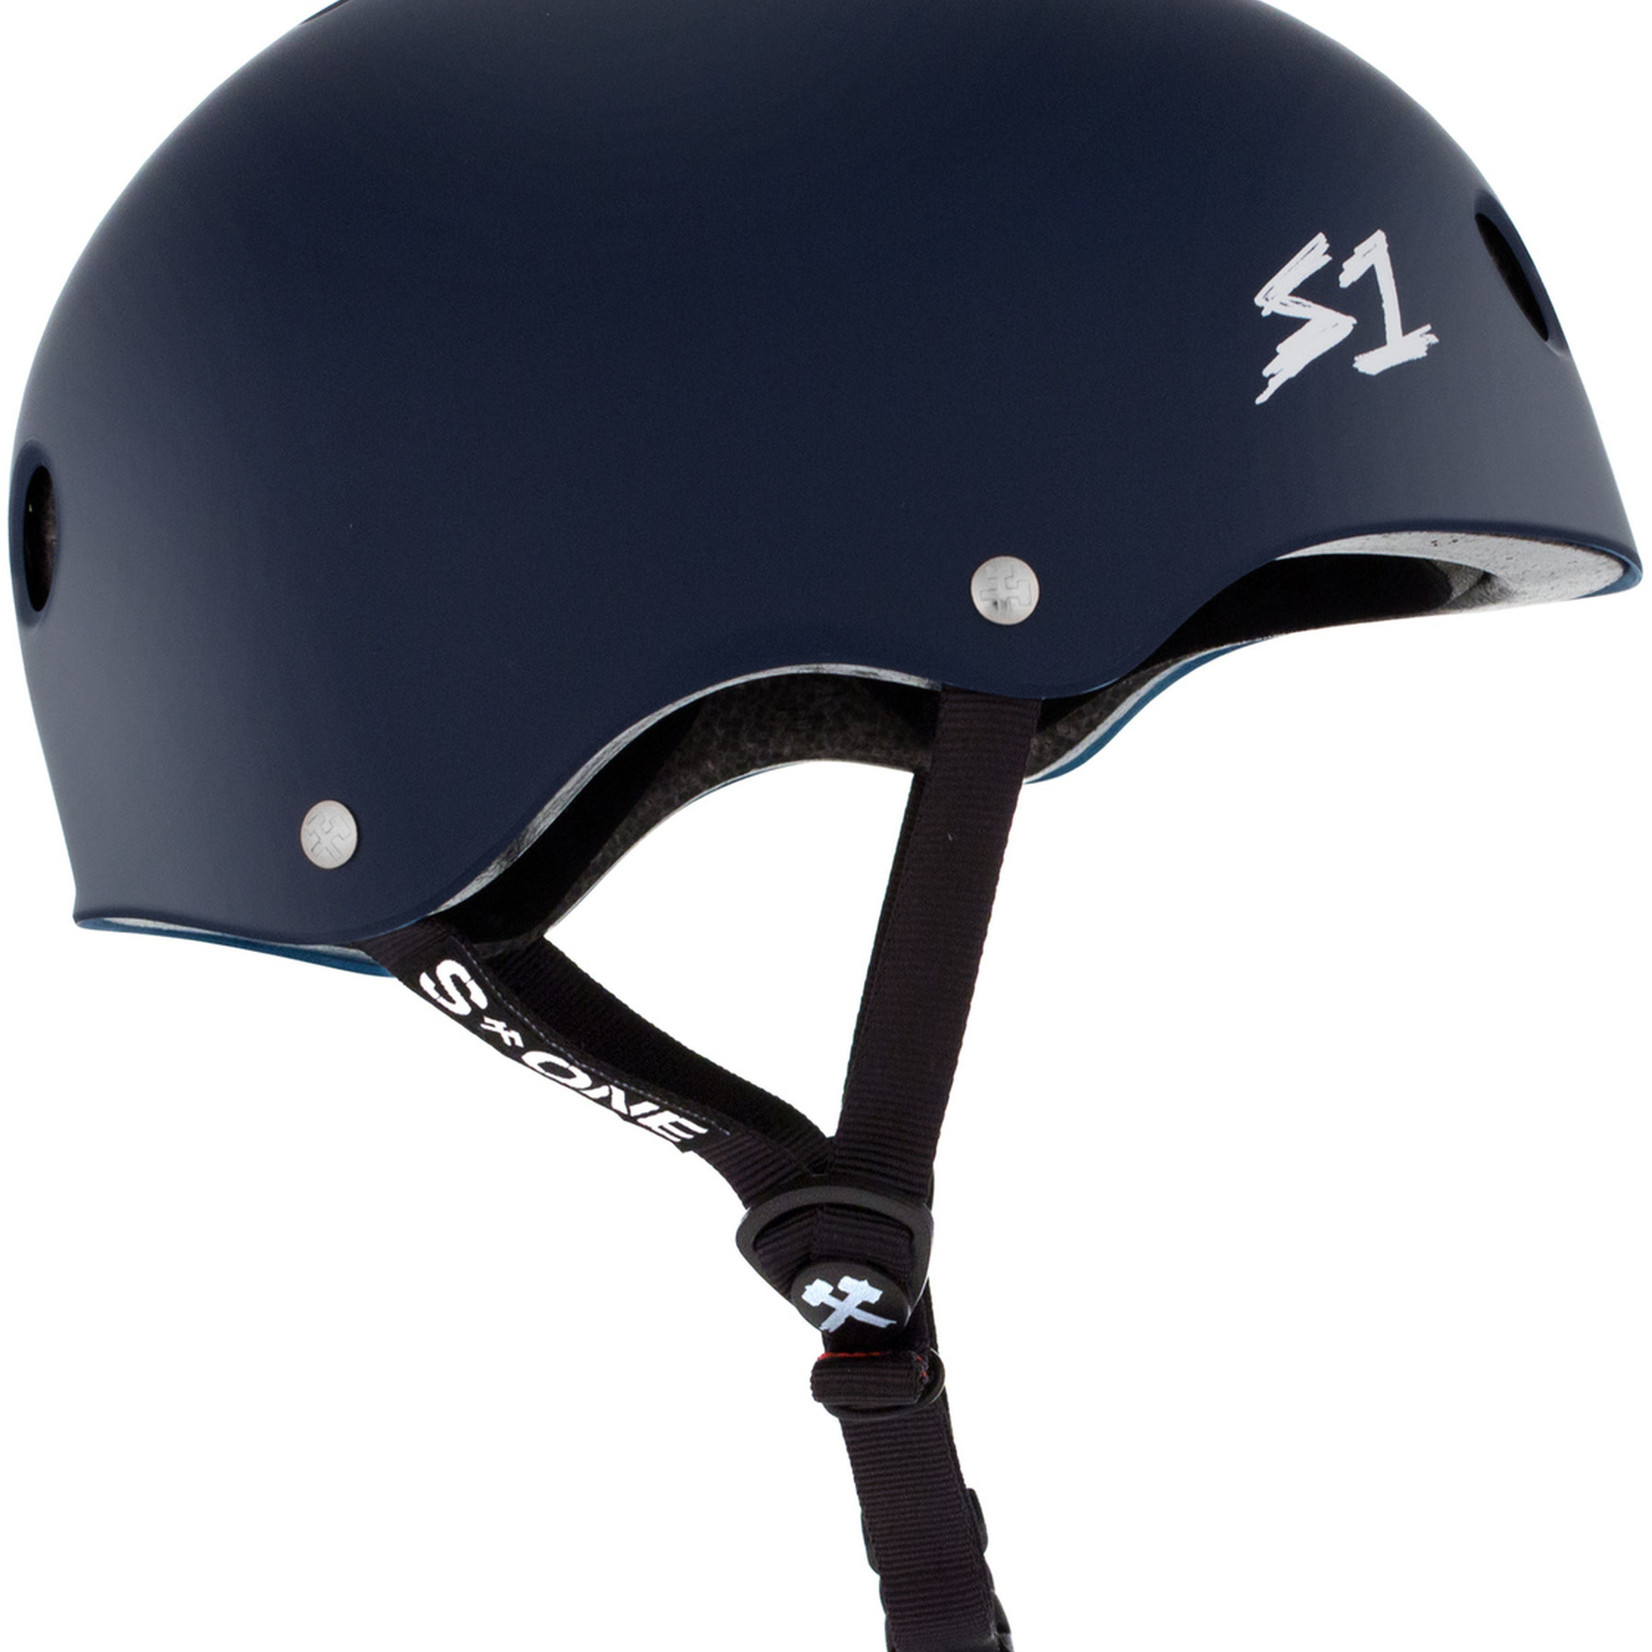 S-One S-One Lifer Helmet